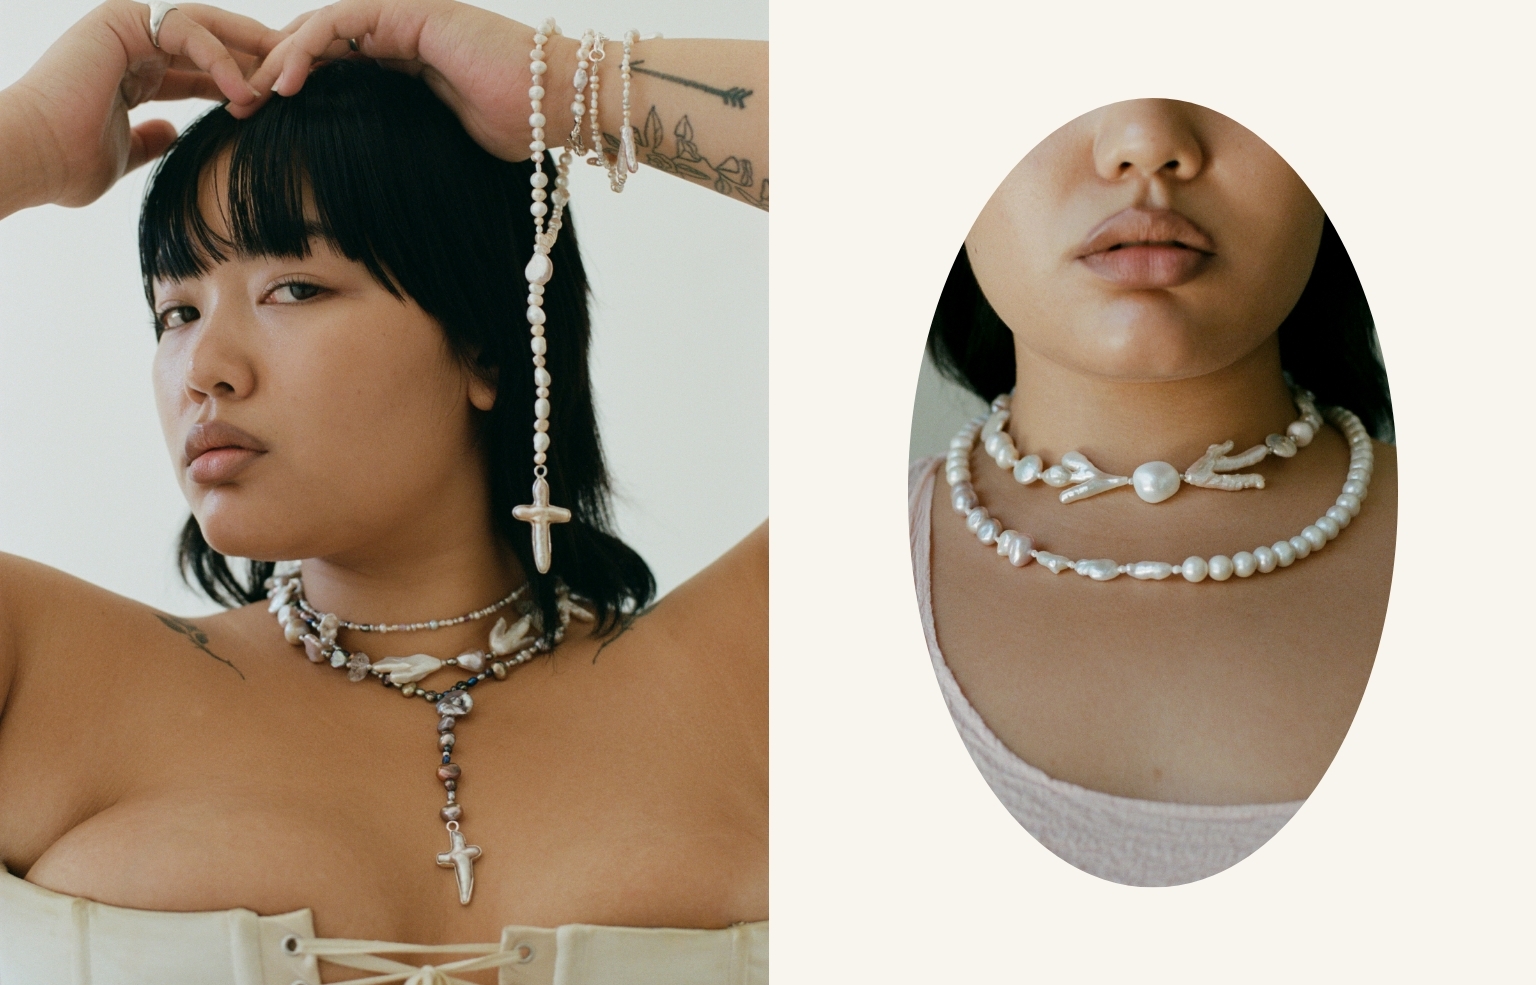 pearl jewelry 2023